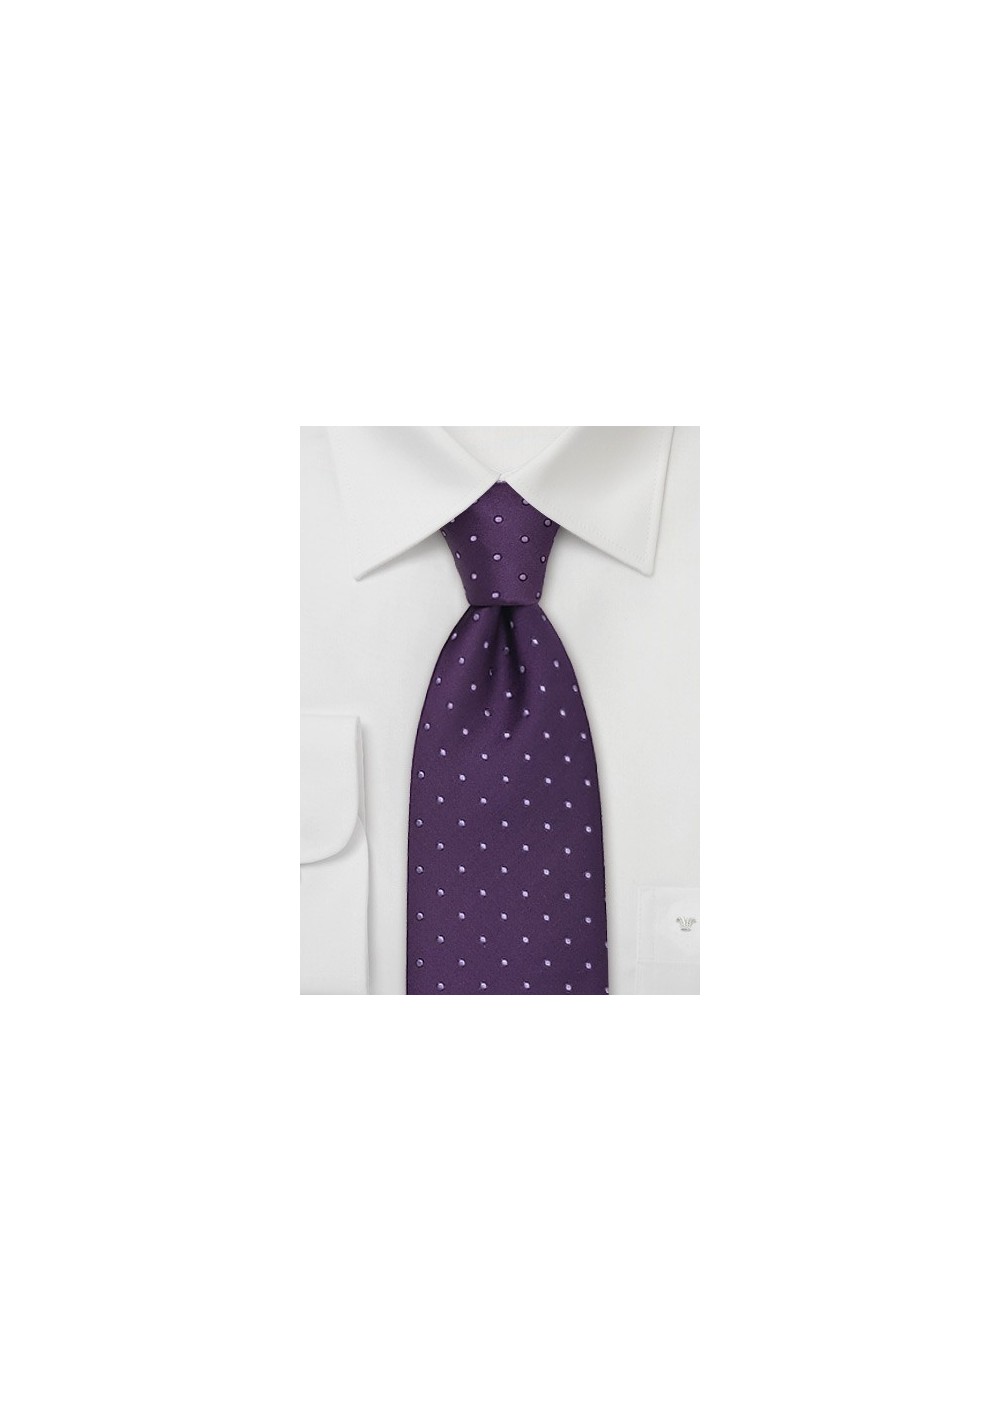 Extra Long Purple Polka Dot Tie